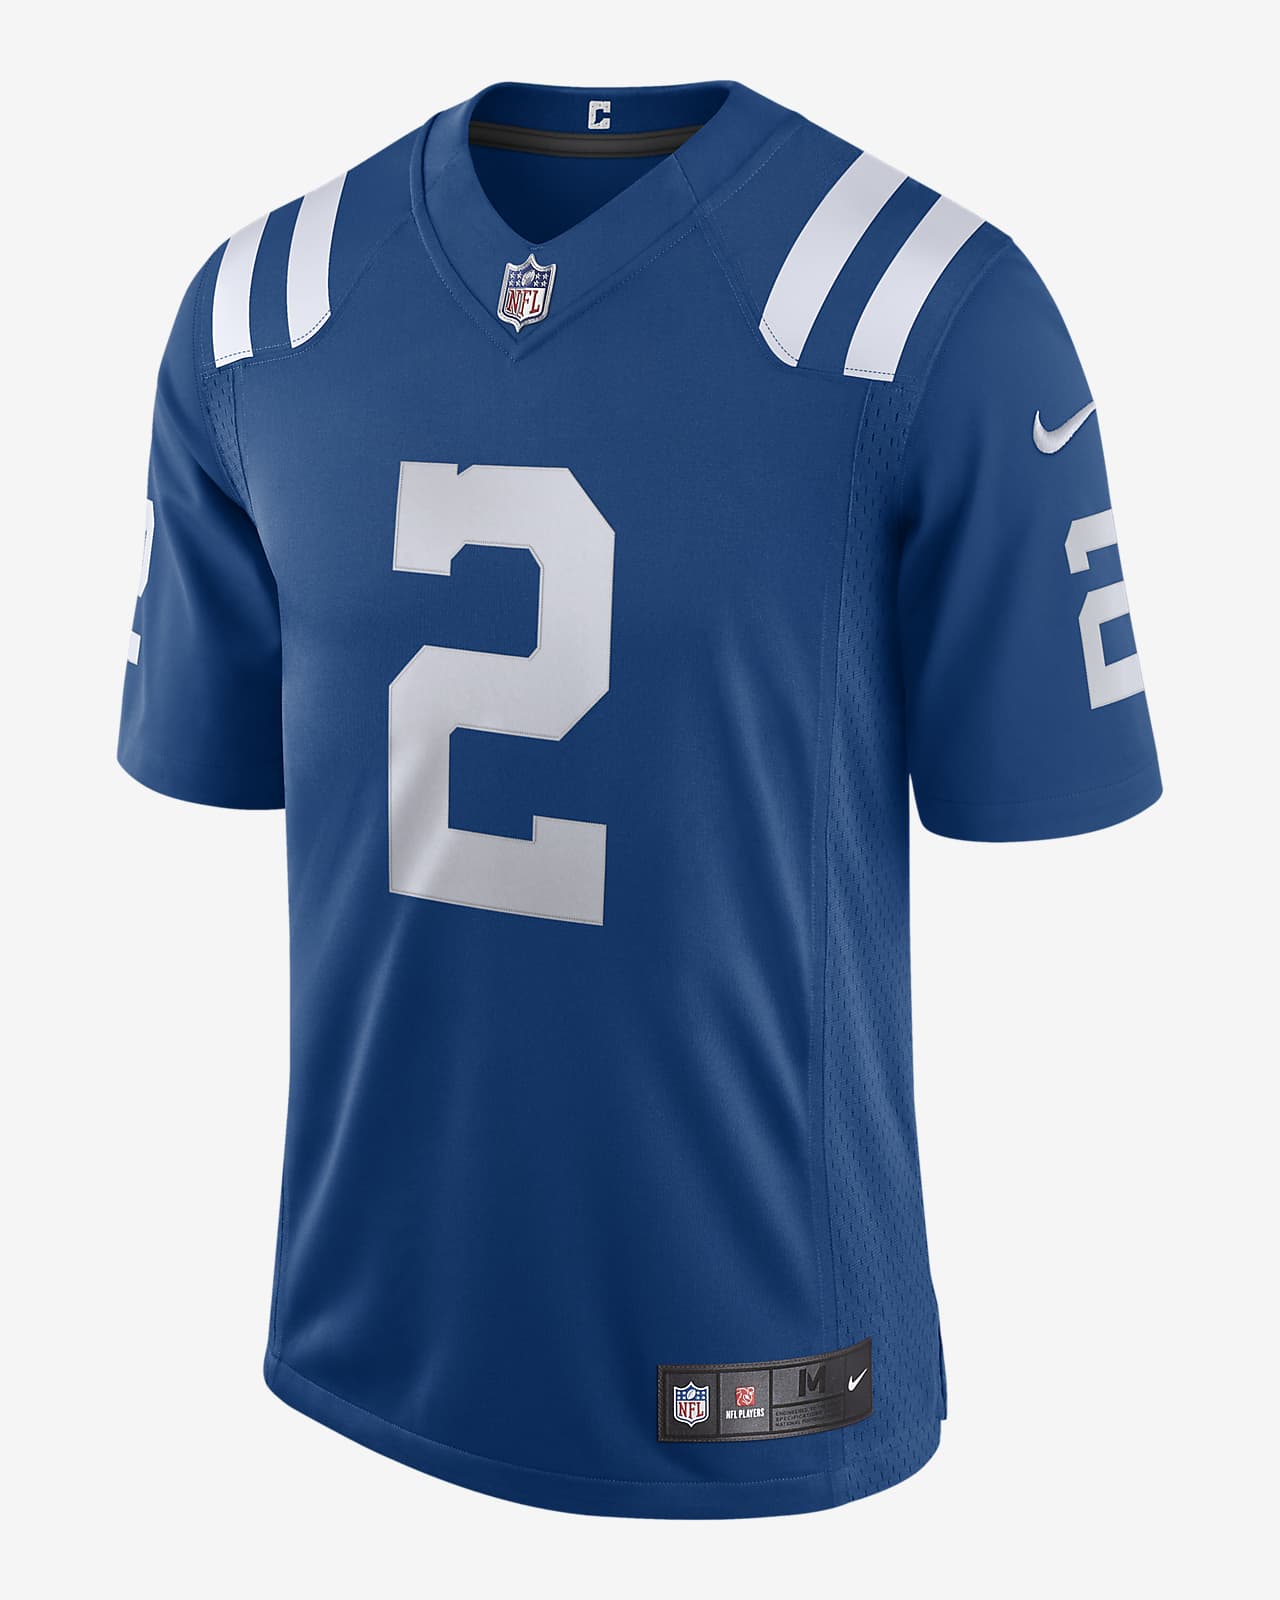 NFL Indianapolis Colts Nike Vapor 